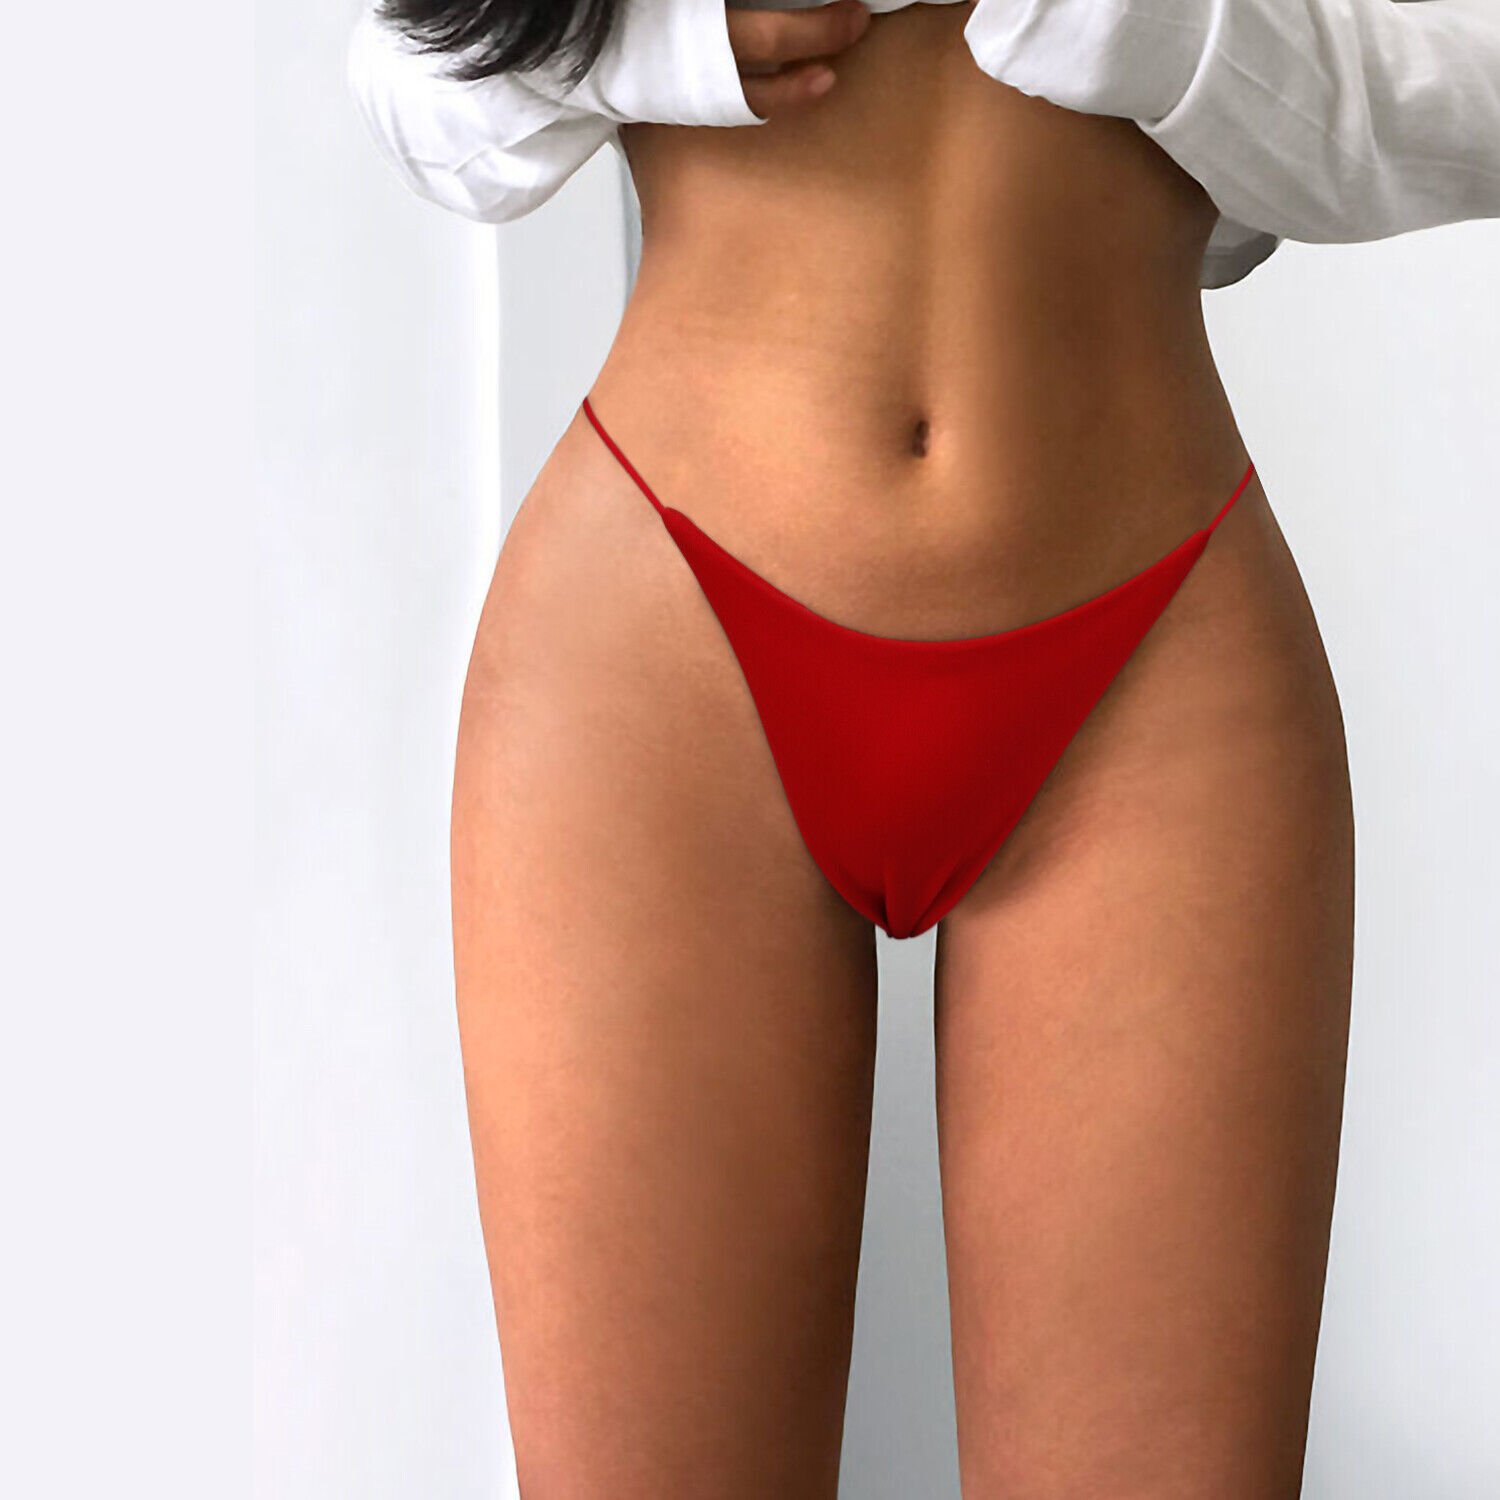 Women's Sexy G-string Bikini Knickes Thongs Low Rise Seamles Panties Briefs S-XL DONWELL - фотография #10